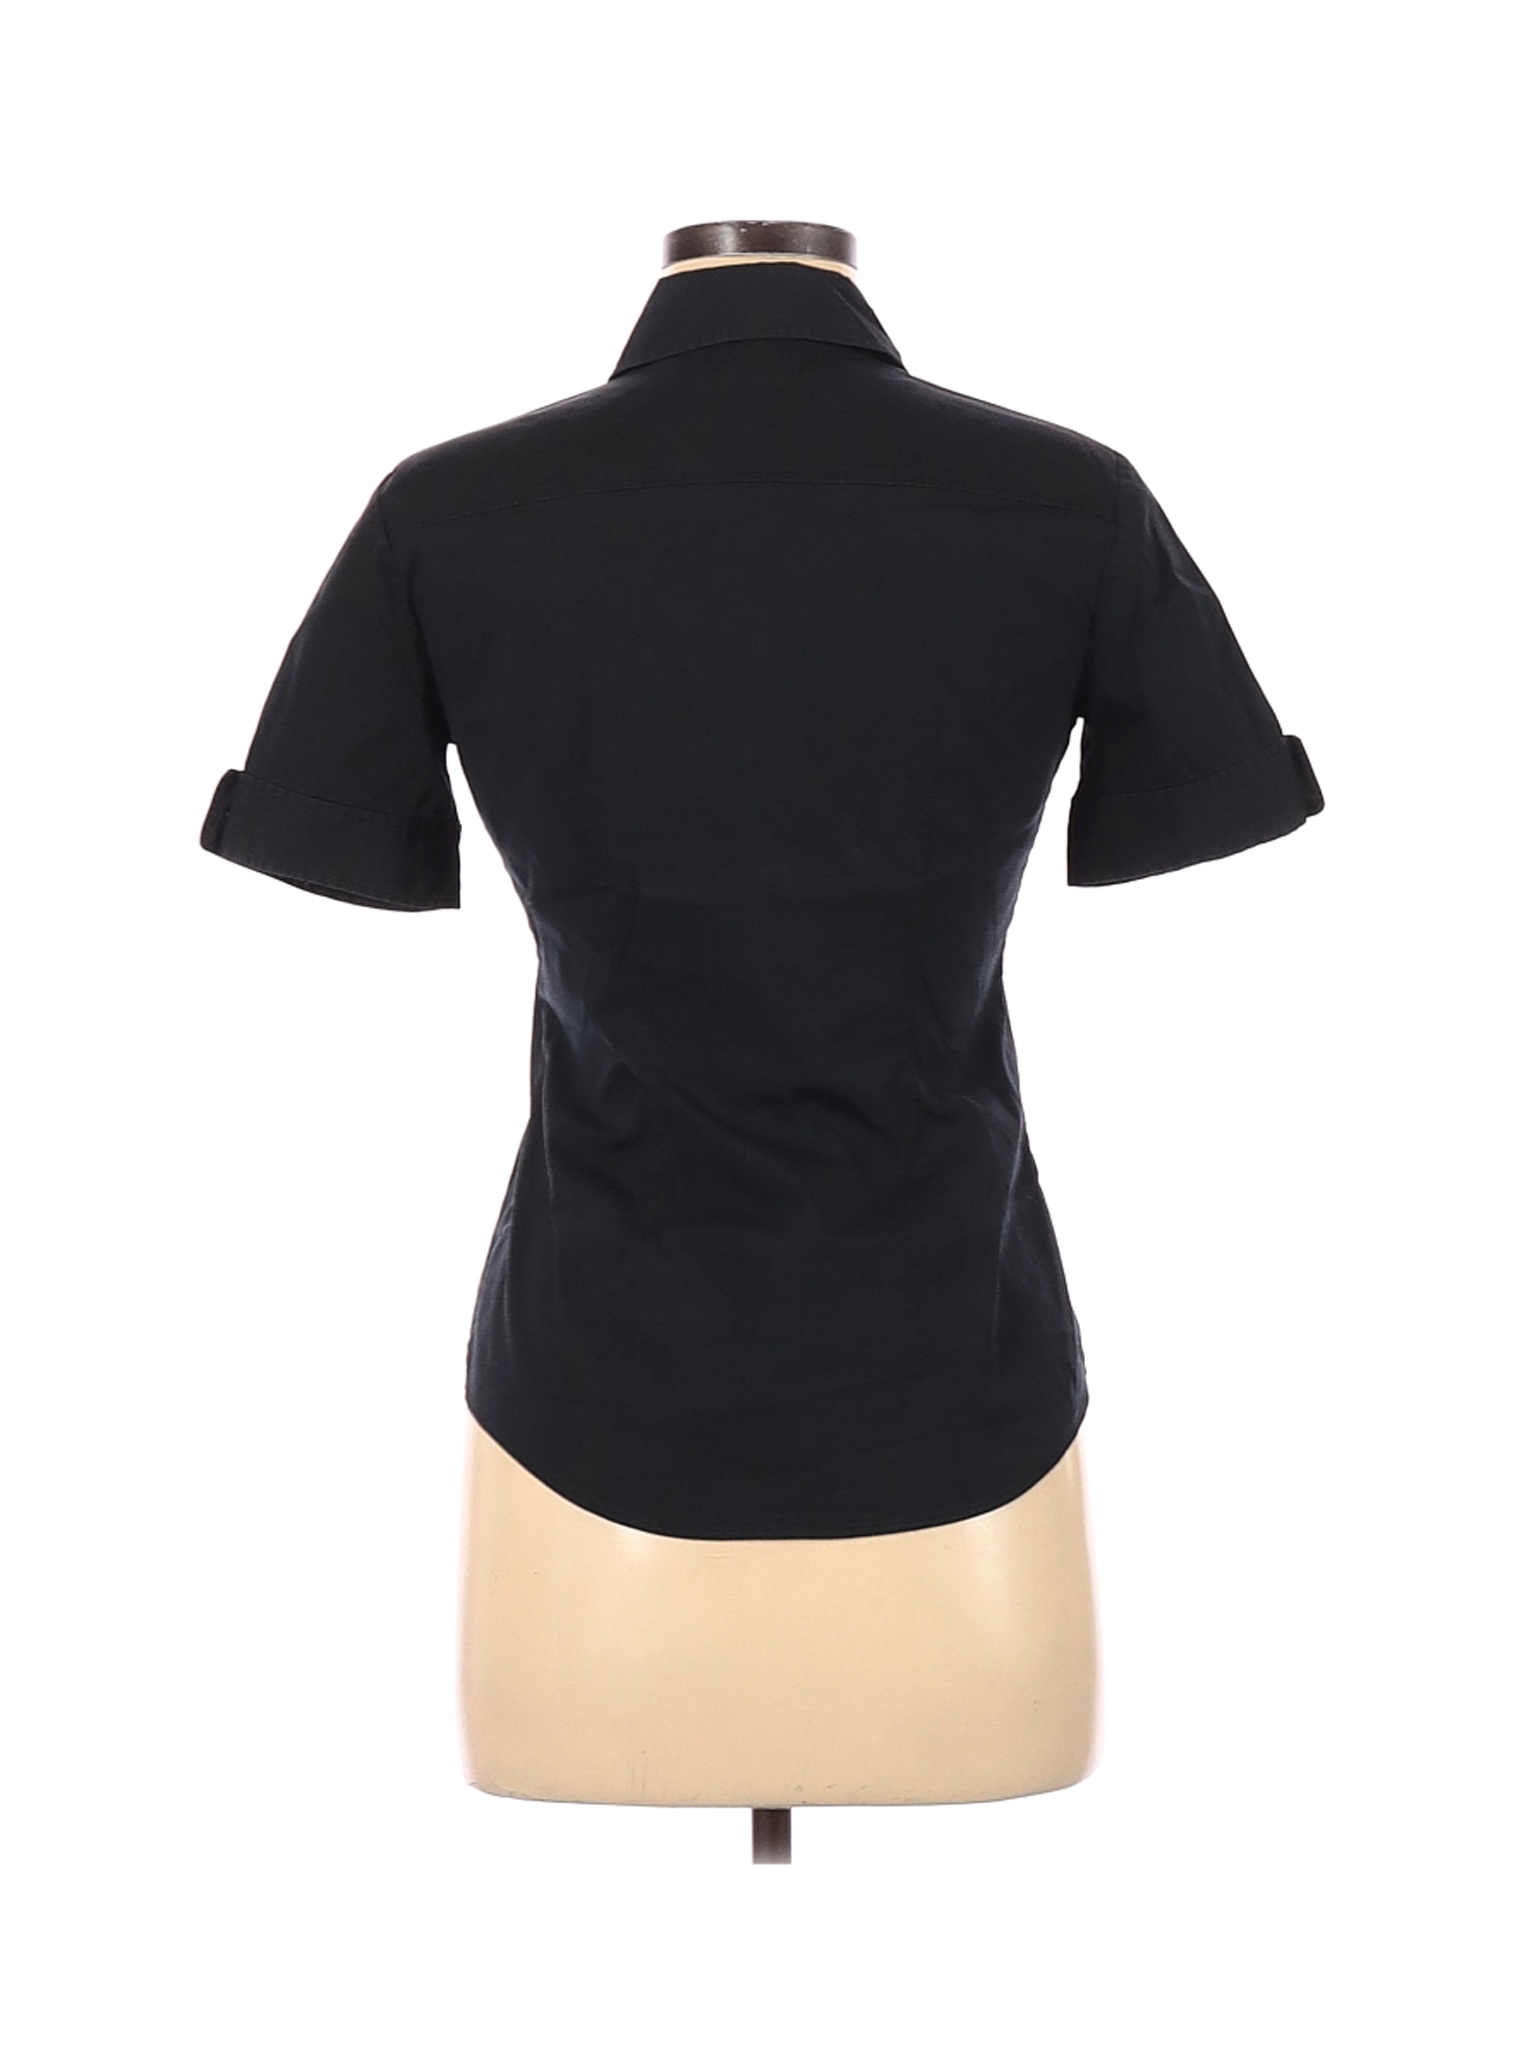 Eileen Fisher 100% Silk Solid Black Sleeveless Blouse Size XL - 66